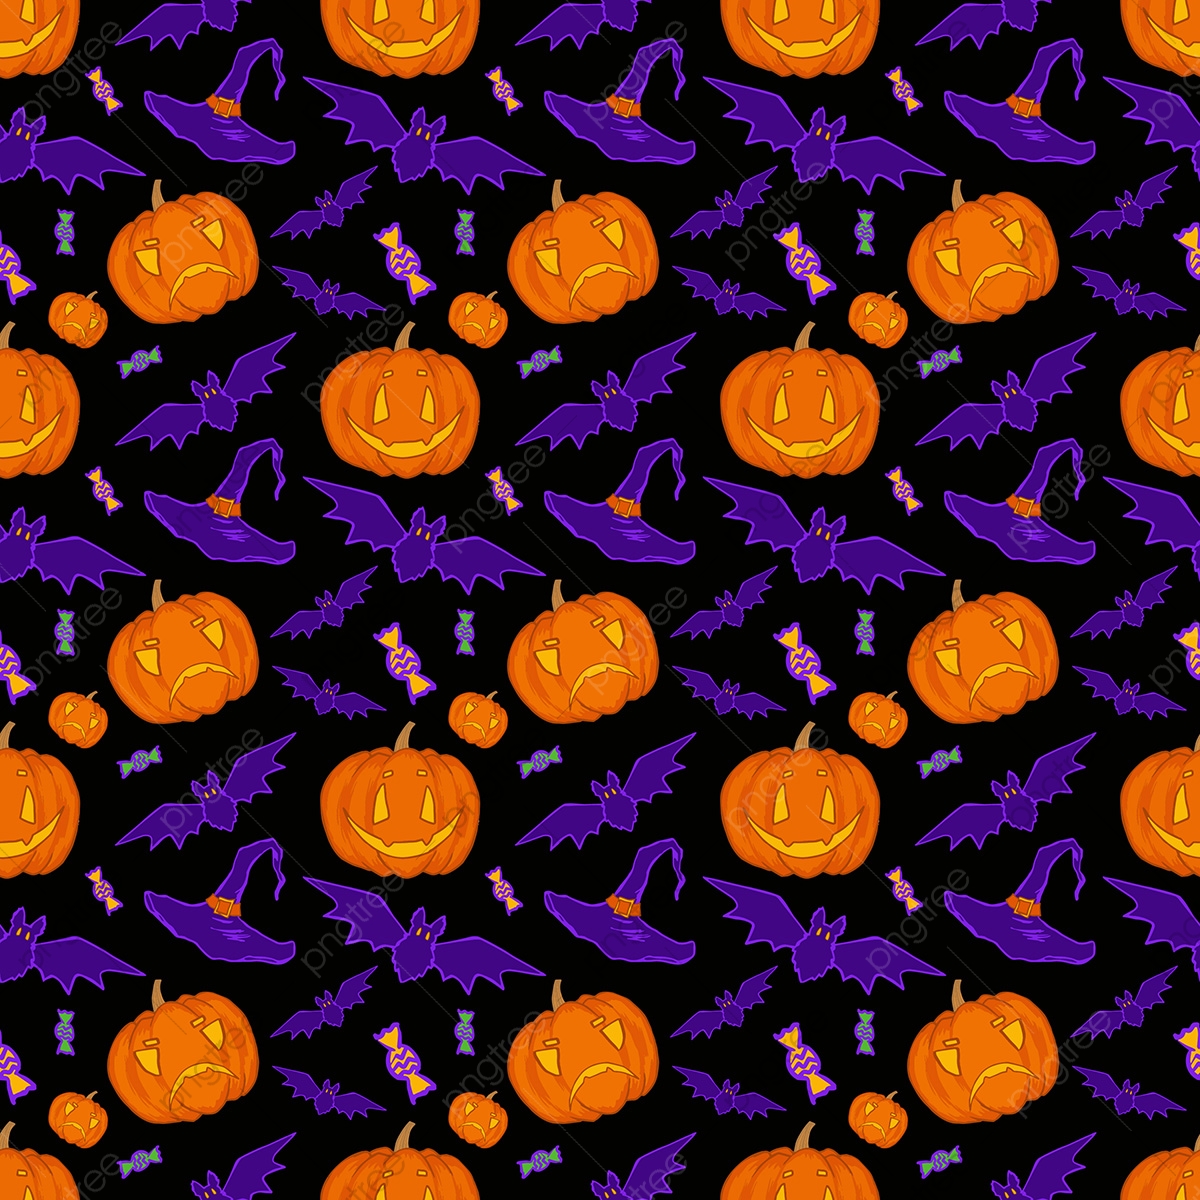 Halloween Bats And Pumpkins Wallpapers - Wallpaper Cave